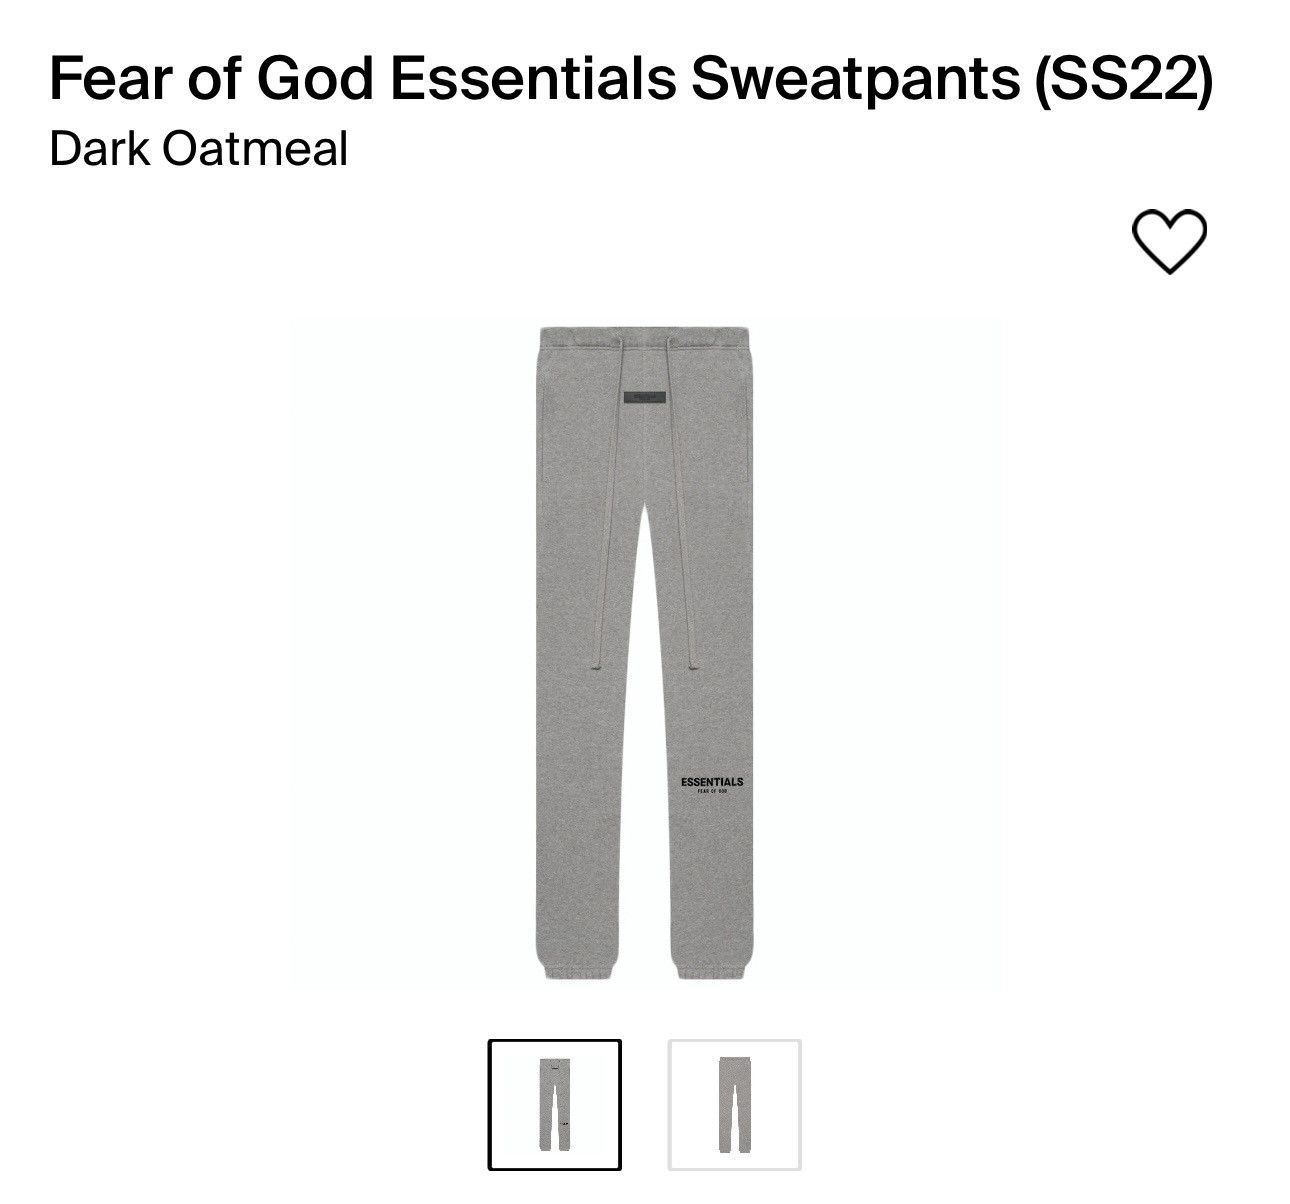 Fear of God Essentials Sweatpants 'Dark Oatmeal